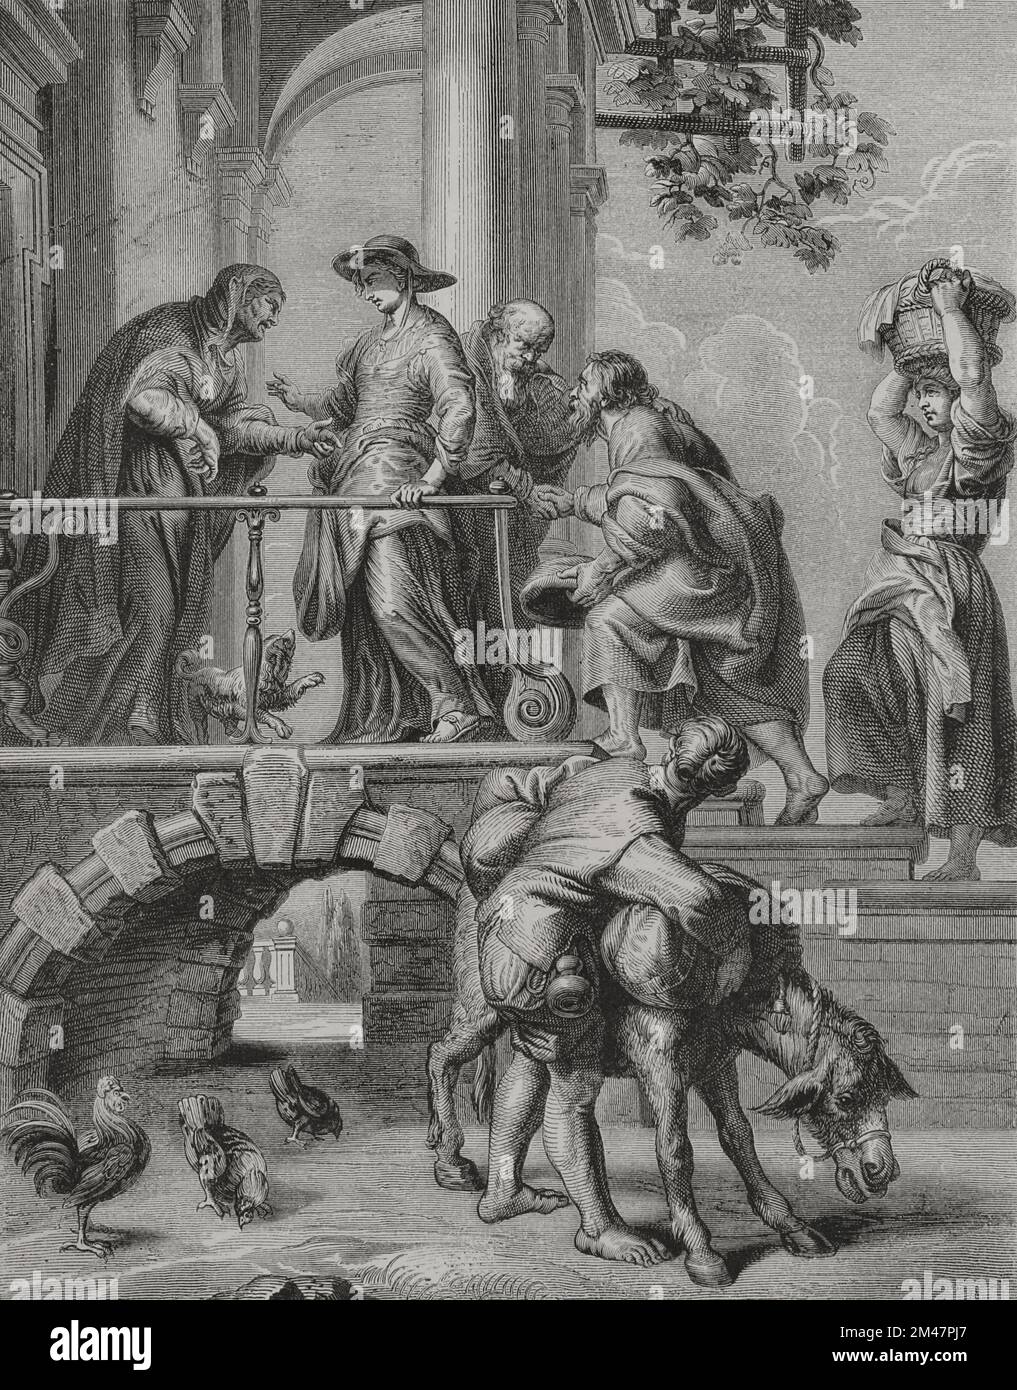 New Testament. The Visitation. Engraving by Pannemaker after drawing by P.P. Rubens. 'Los Héroes y las Grandezas de la Tierra'. Volume I. 1854. Author: Pannemaker. Stock Photo